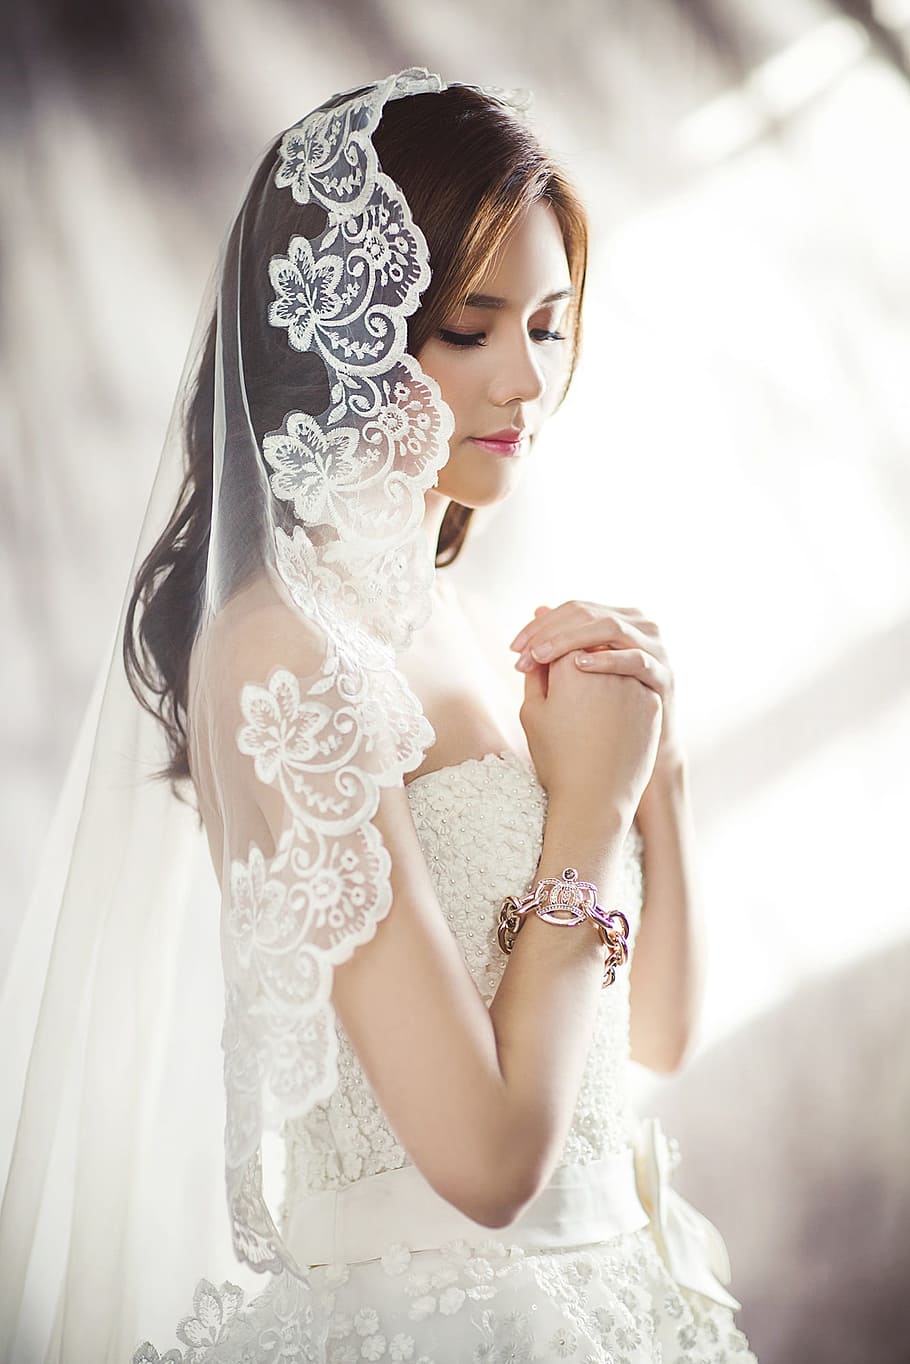 tilt shift lens photography, woman, wearing, white, wedding gown, wedding dresses, fashion, character, bride, veil